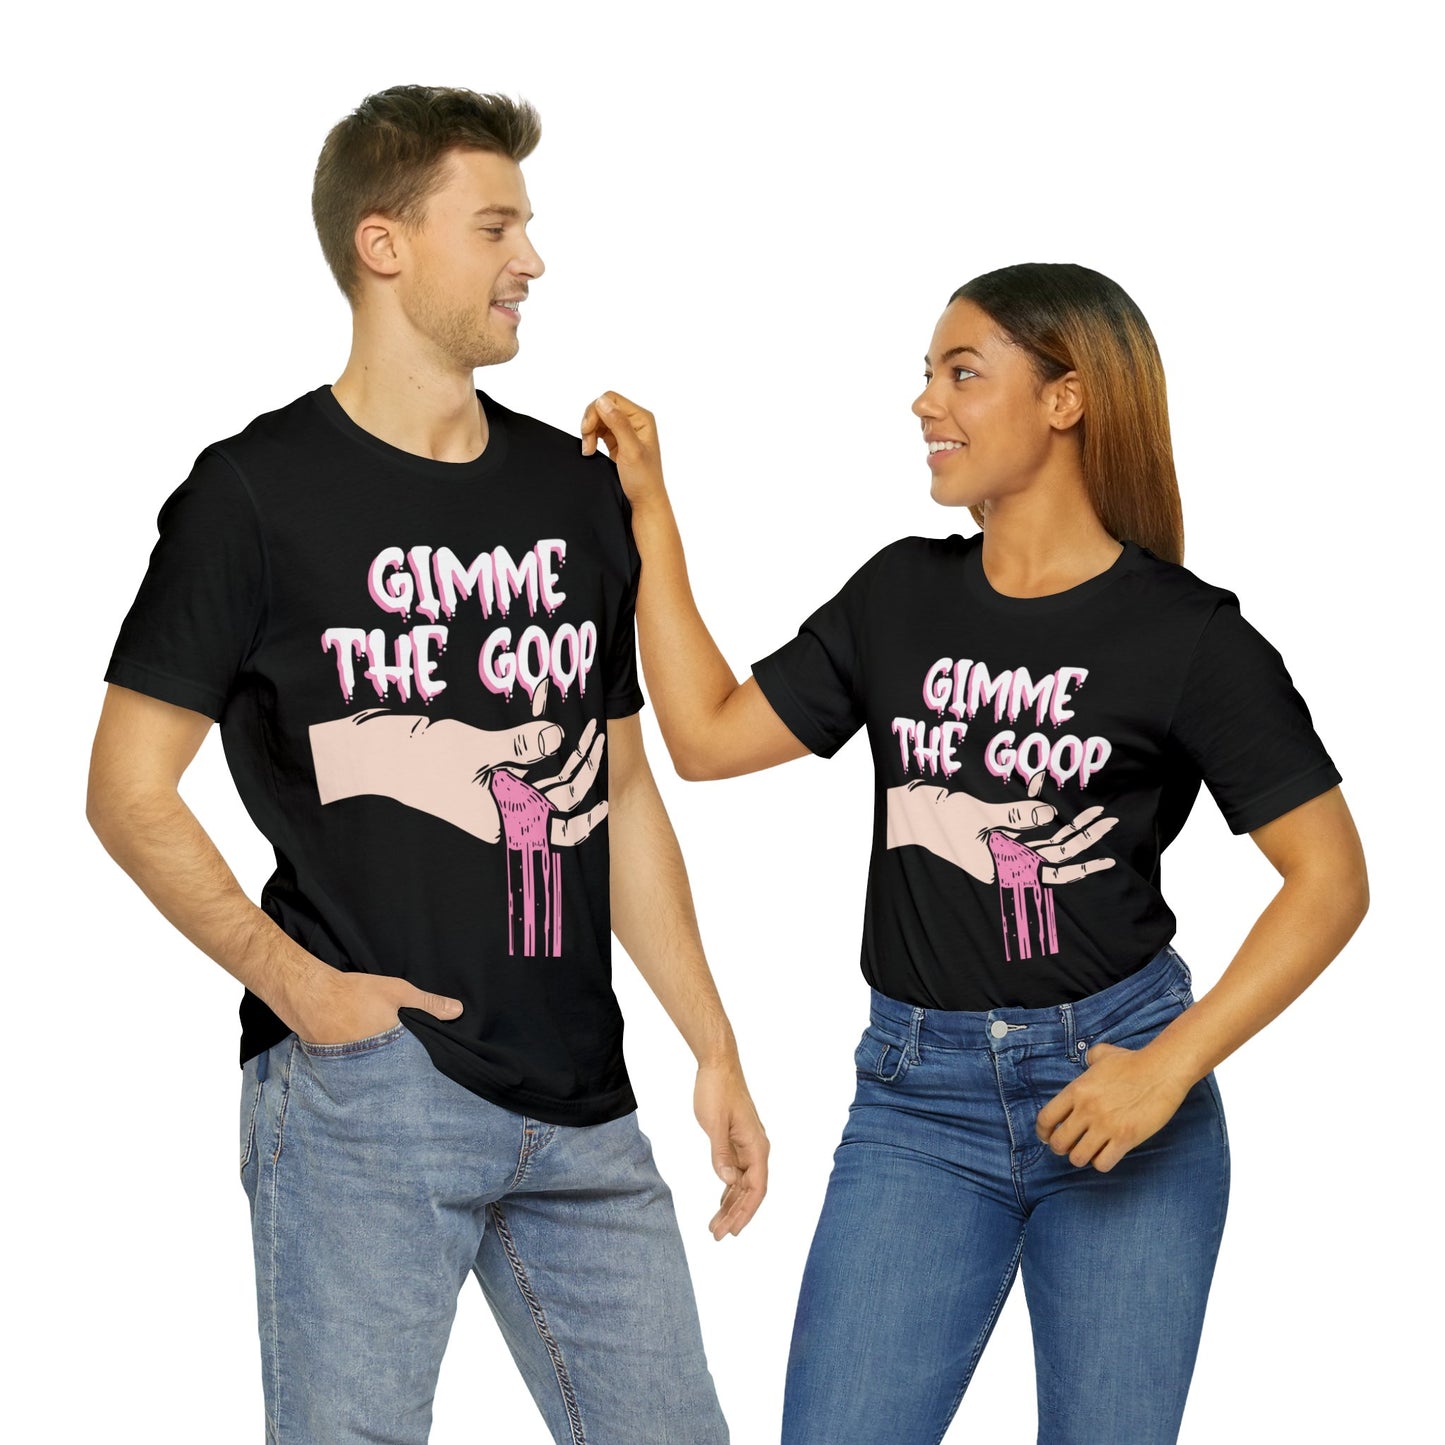 Gimme the Goop T-Shirt